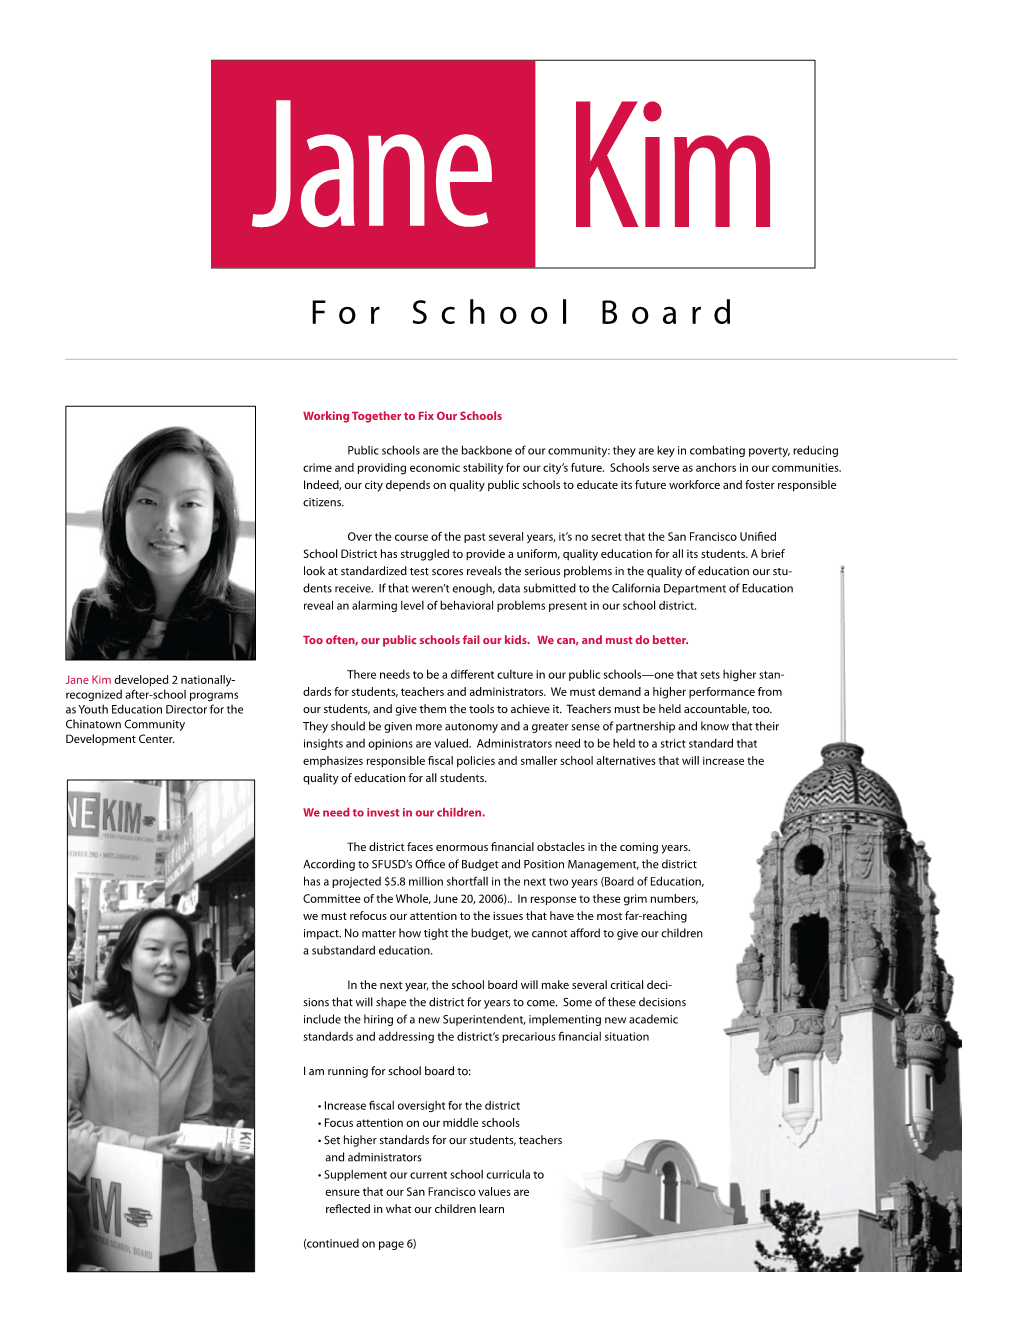 Jane Kim for School Board